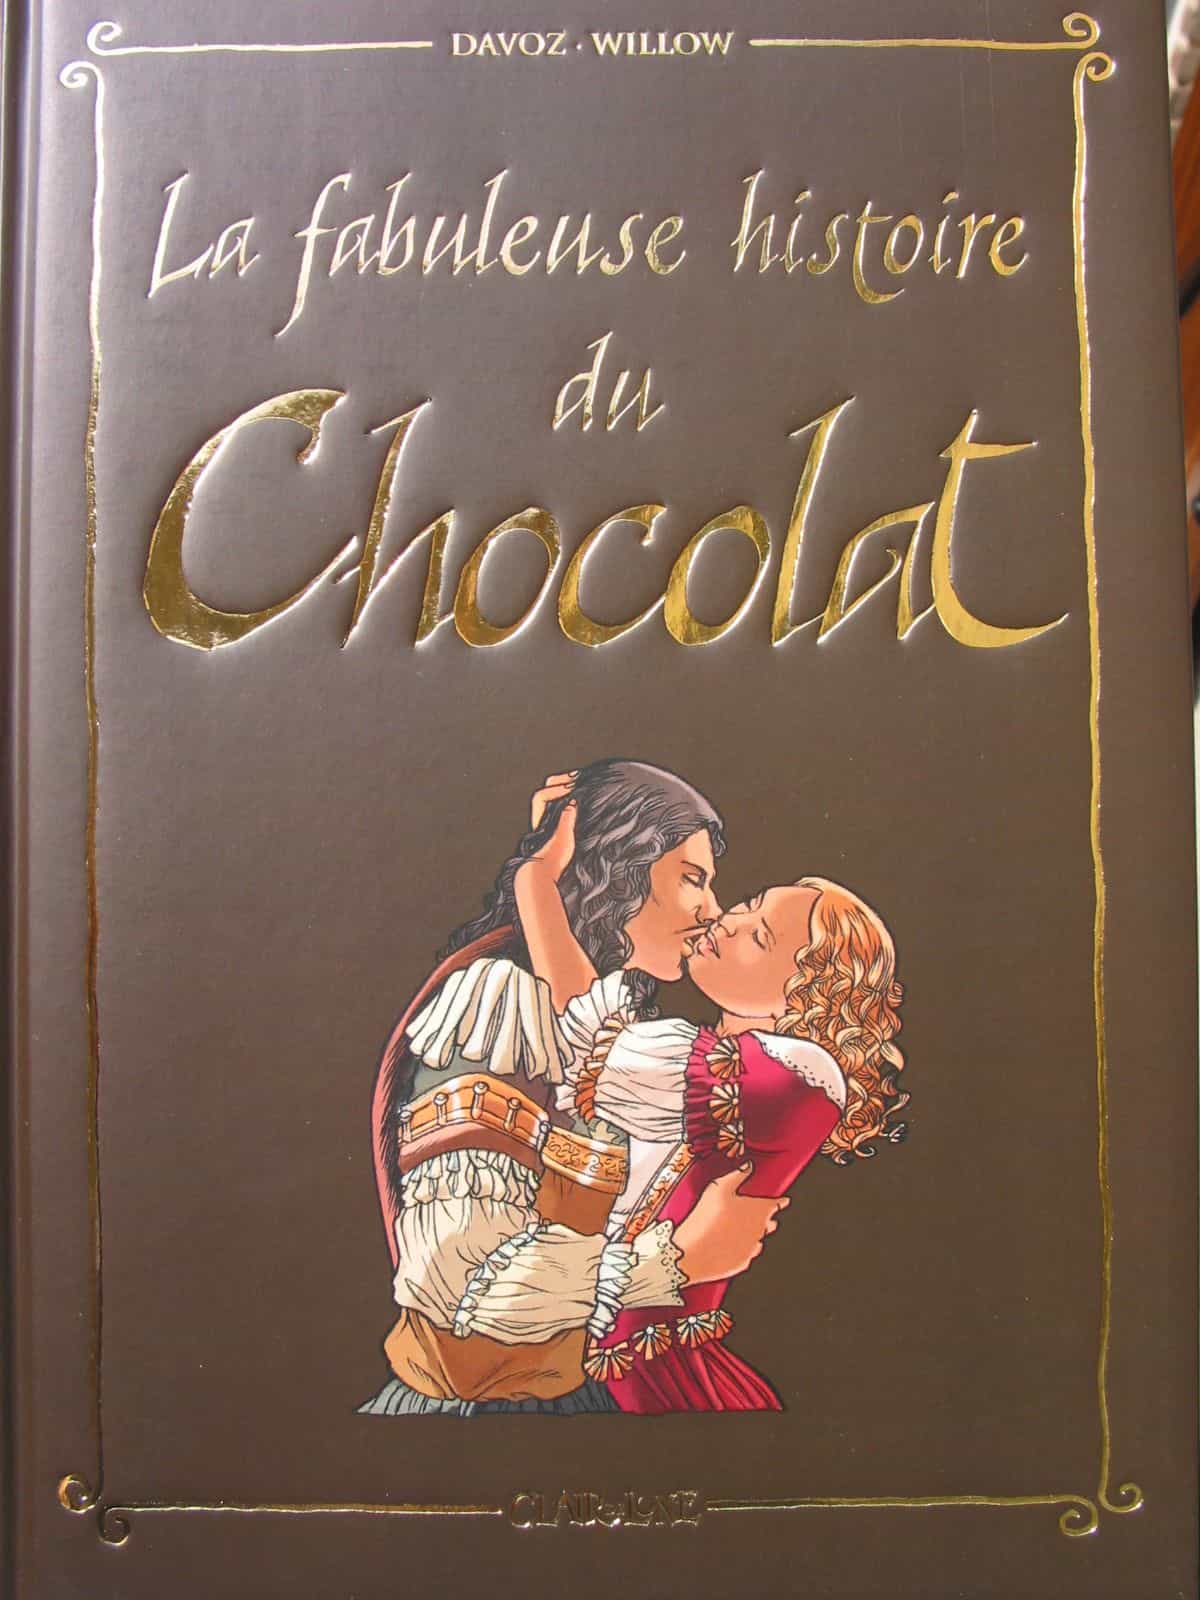 La fabuleuse histoire du chocolat en bd